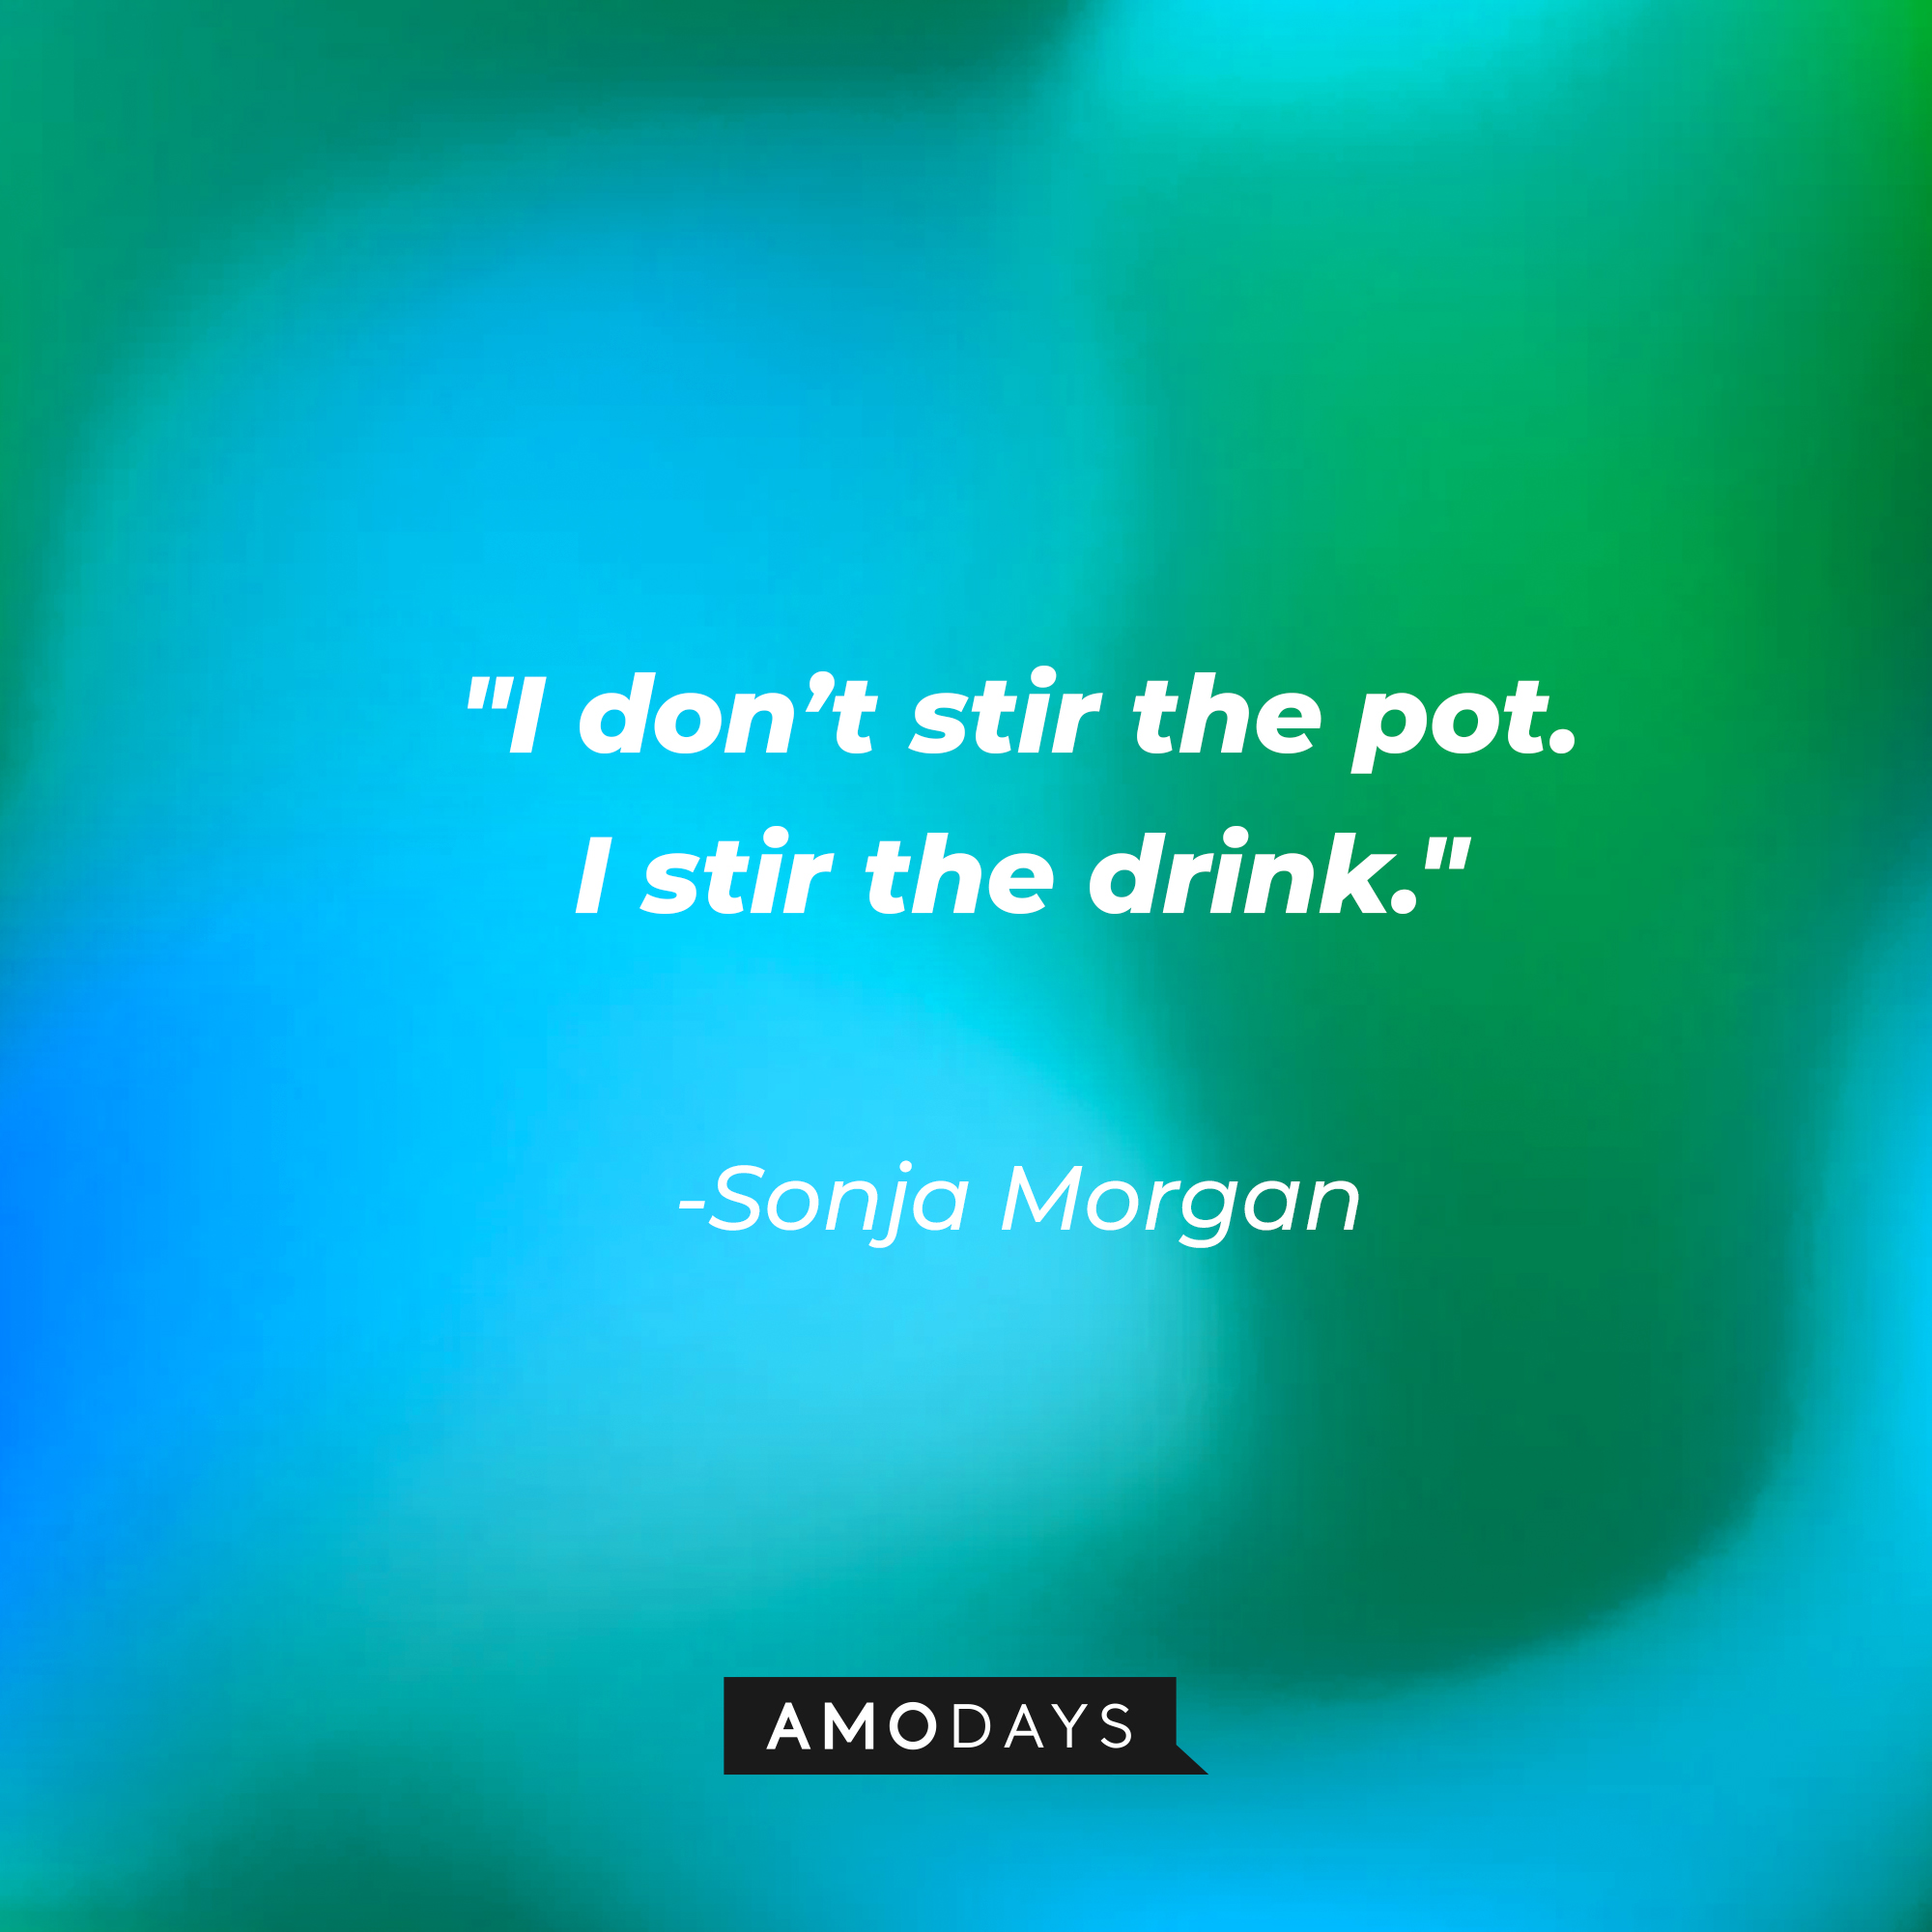 Sonja Morgan's quote: "I don't stir the pot. I stir the drink." | Source: Amodays